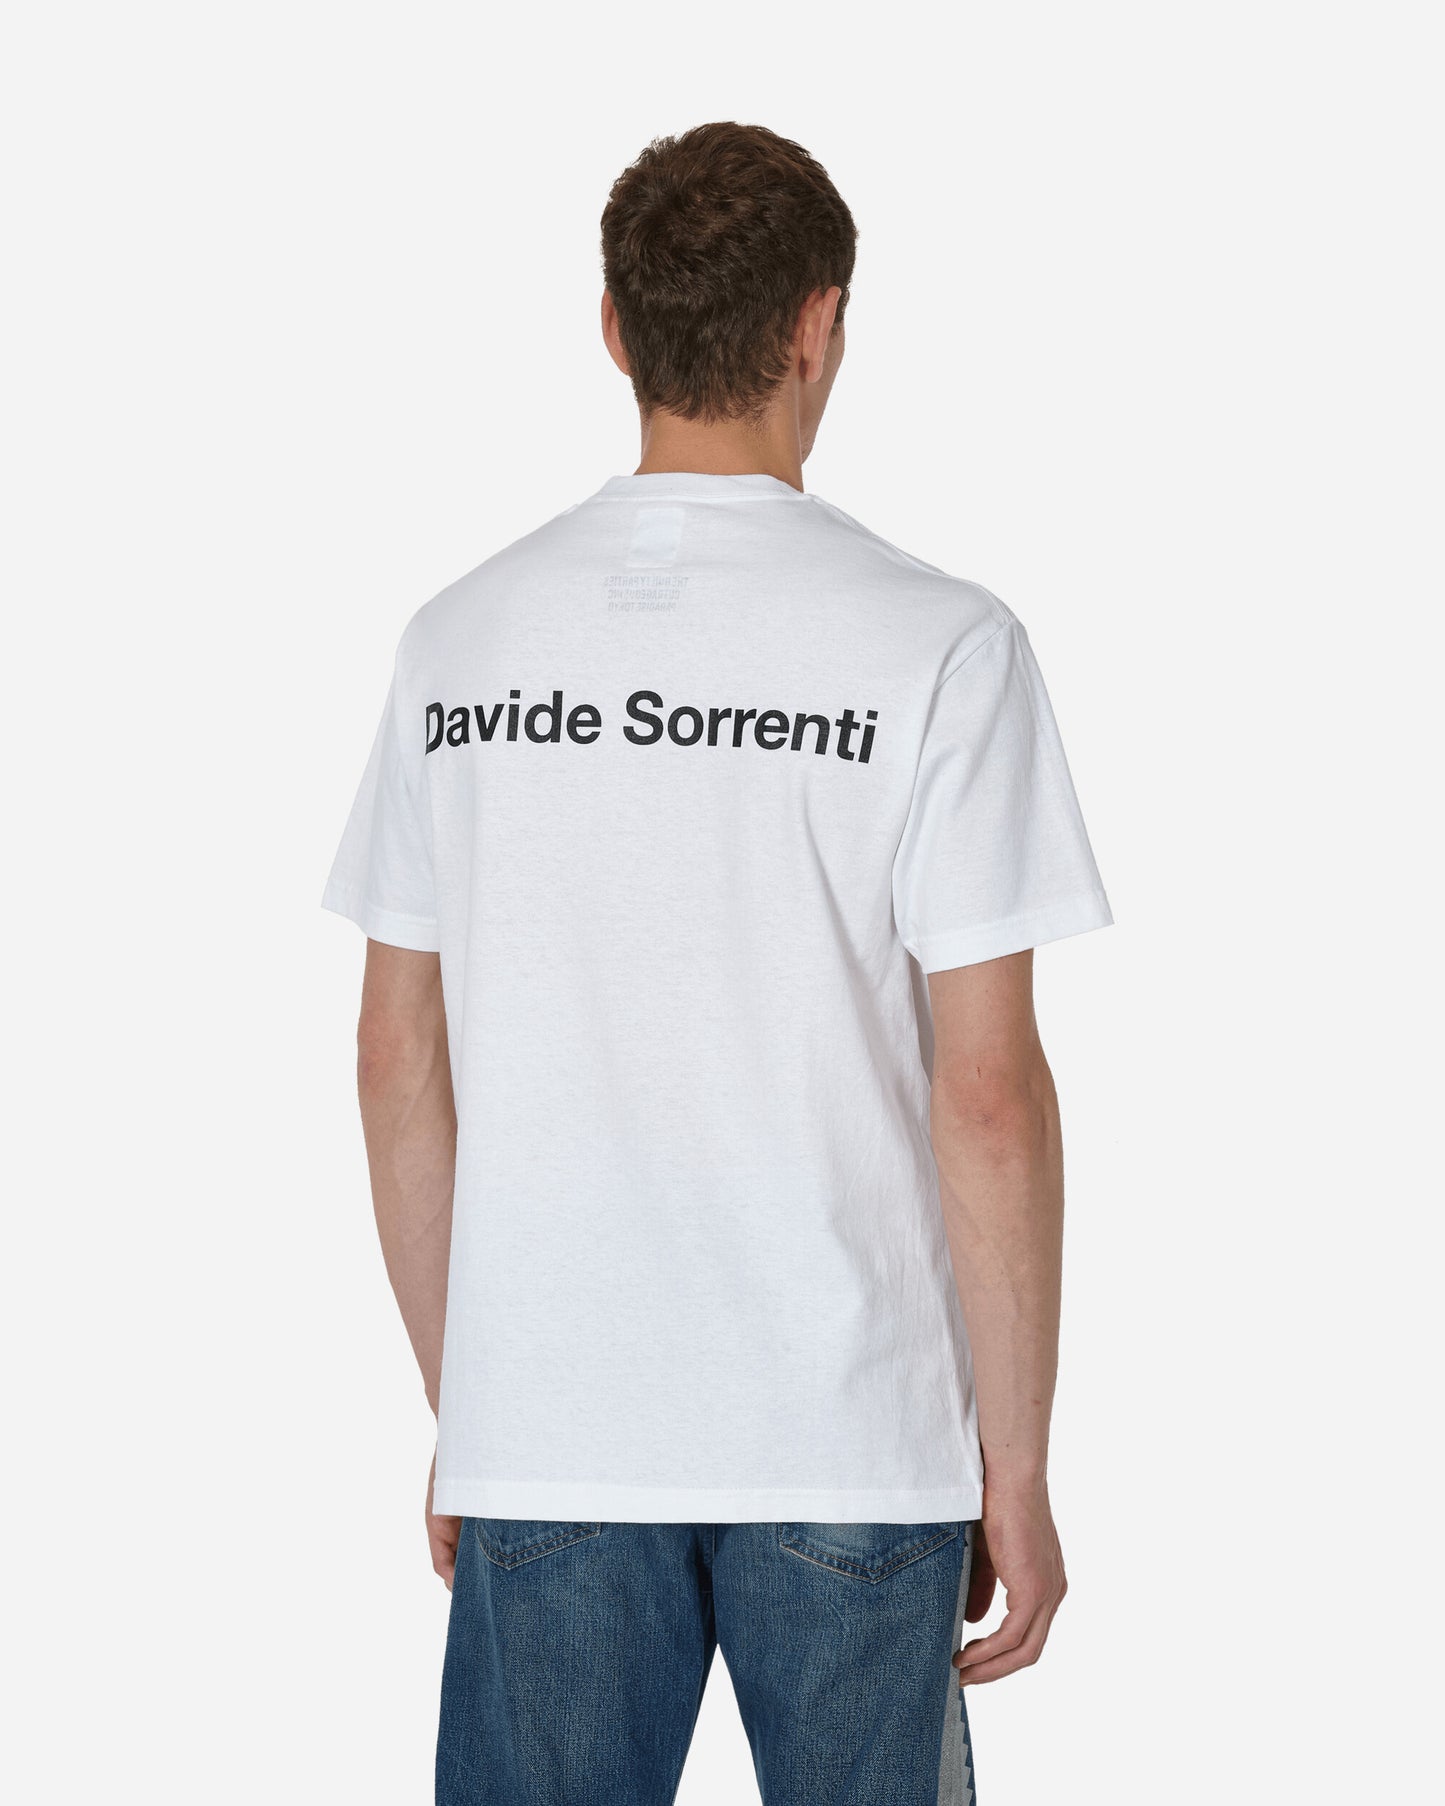 WACKO MARIA Davide Sorrenti / Crew Neck T-Shirt ( Type-1 ) White T-Shirts Shortsleeve DSORRENTI-WM-TEE01 1